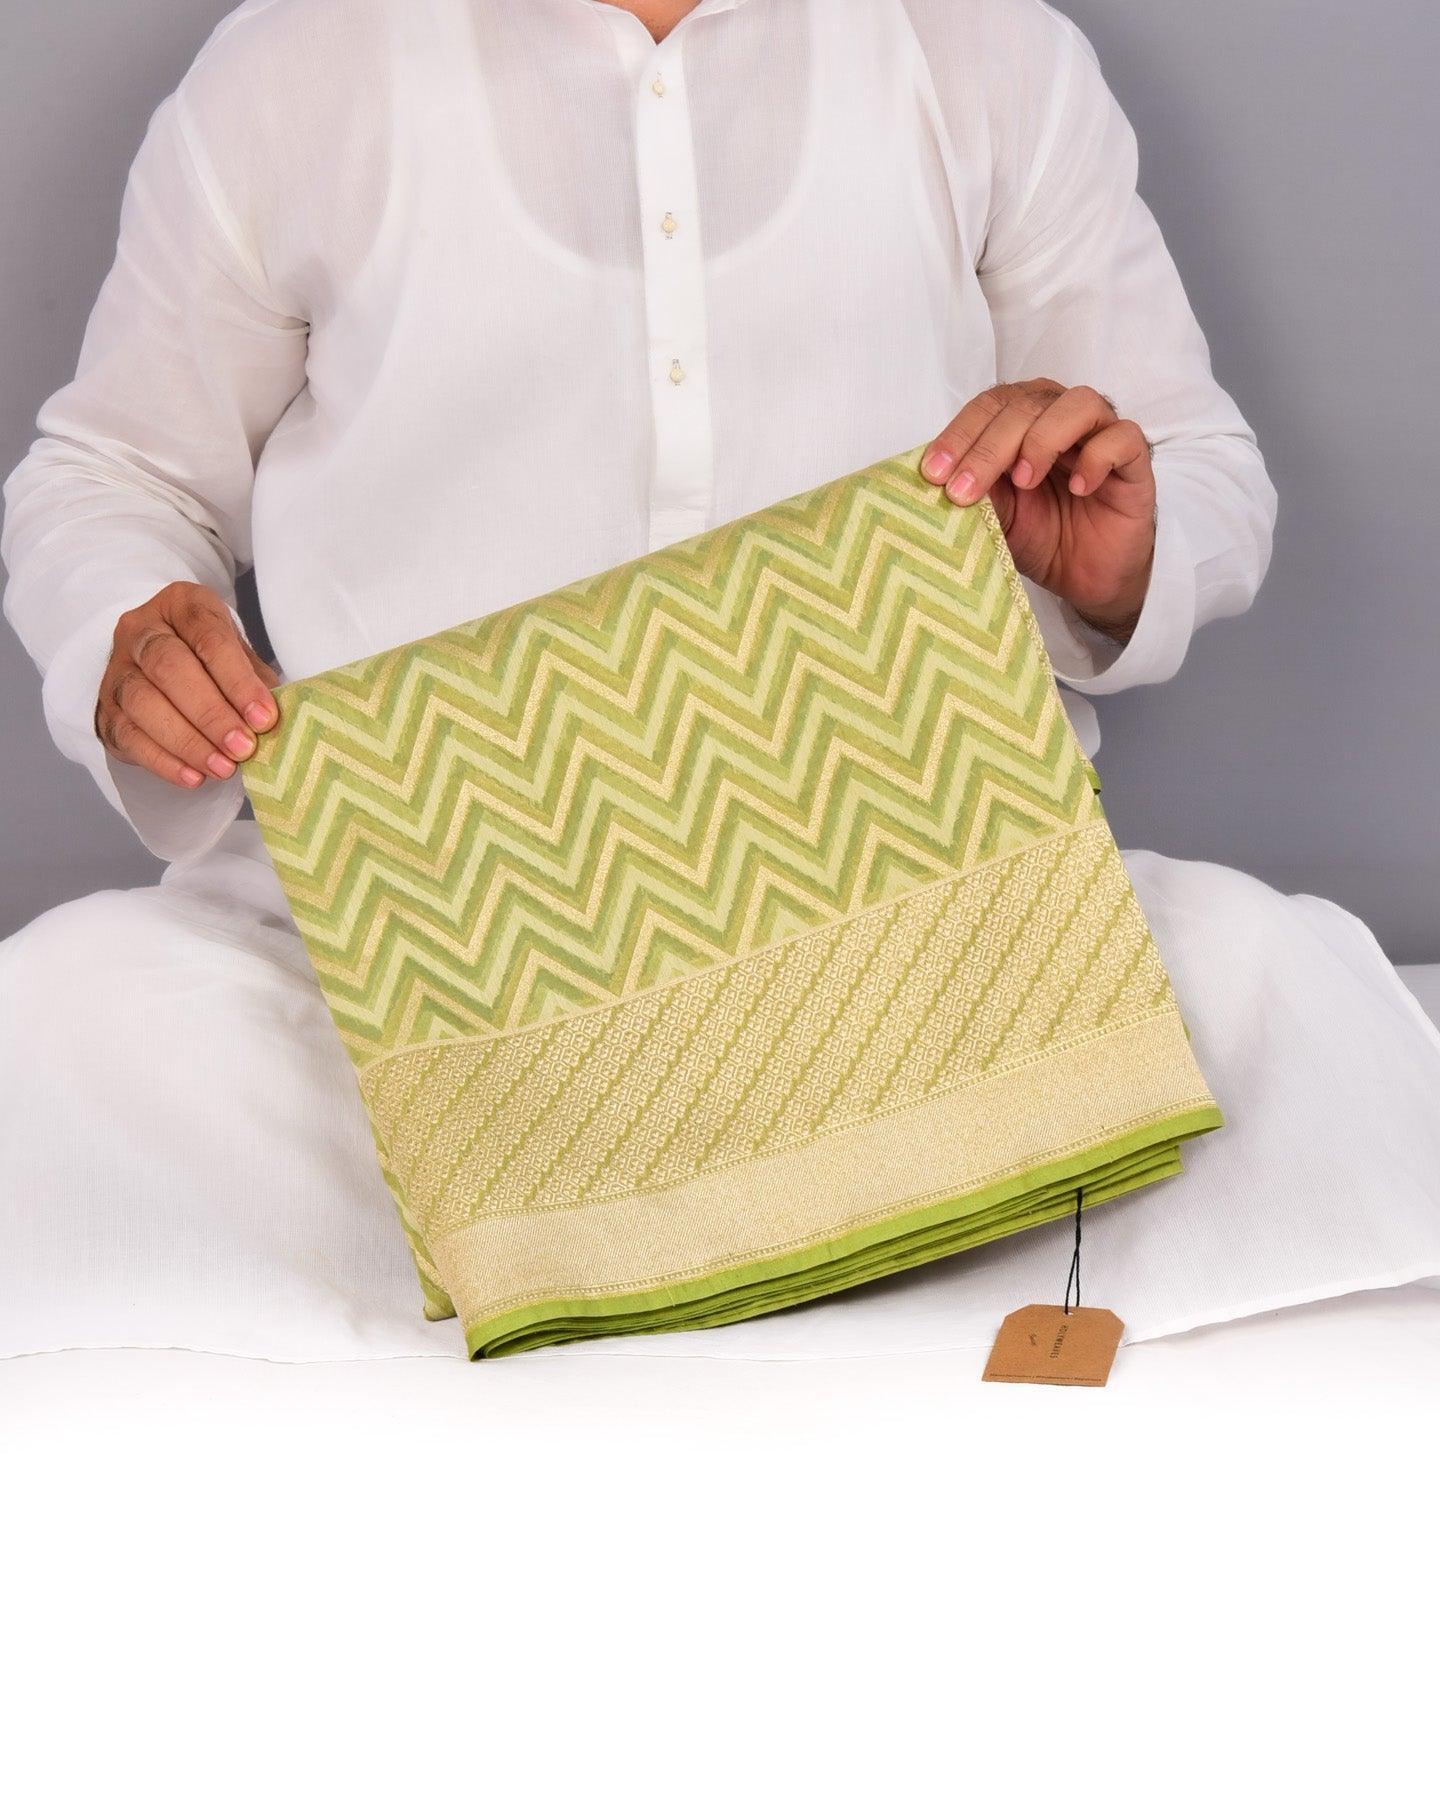 Sage Green Banarasi Chevron Zig-Zag Alfi Cutwork Brocade Handwoven Cotton Silk Saree - By HolyWeaves, Benares